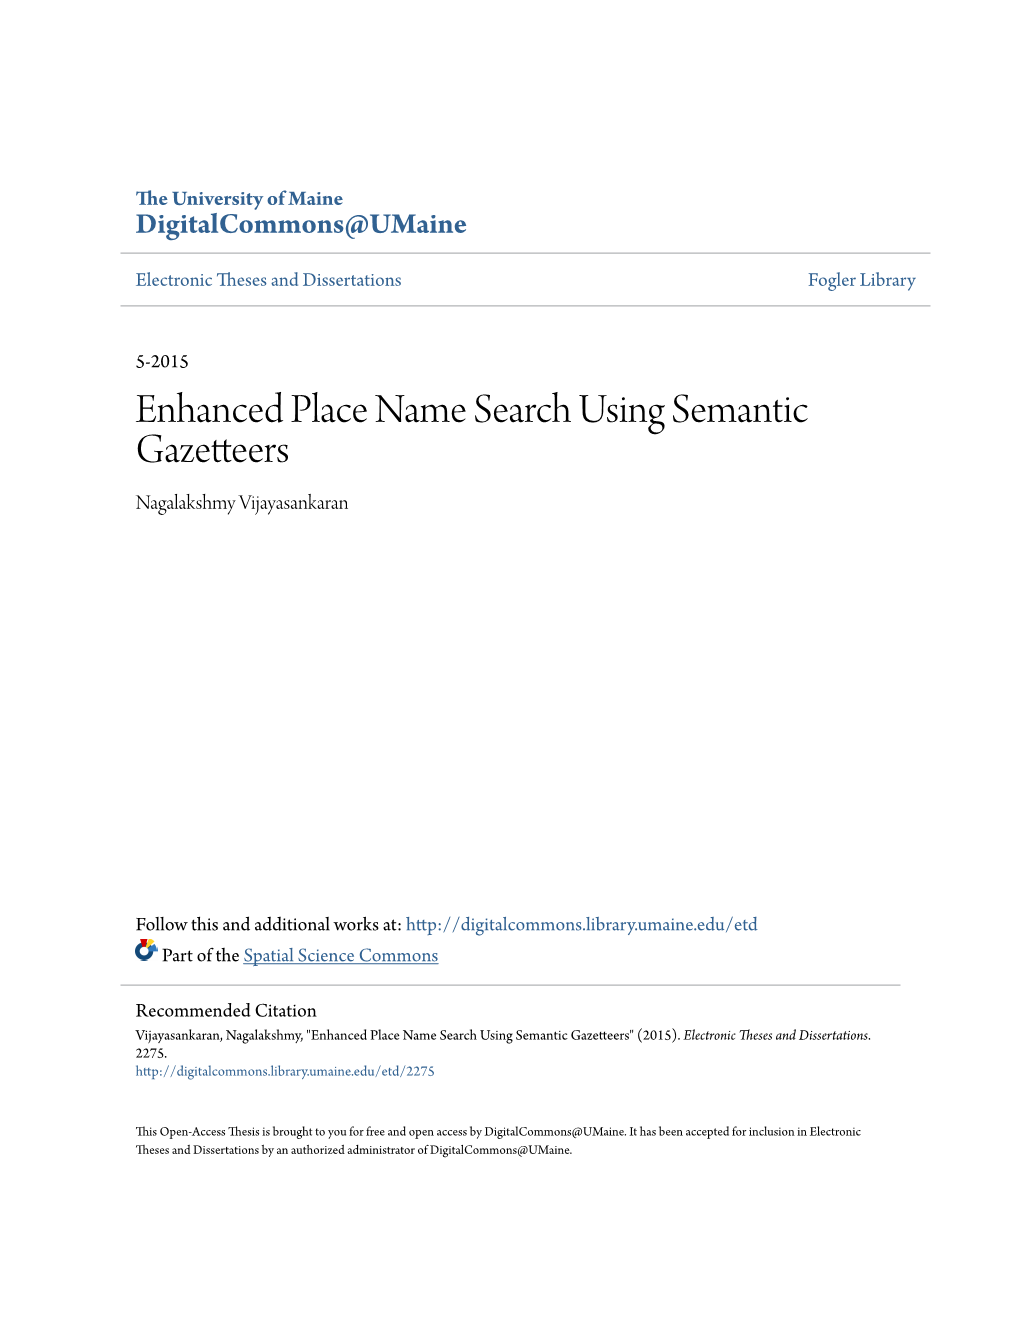 Enhanced Place Name Search Using Semantic Gazetteers Nagalakshmy Vijayasankaran